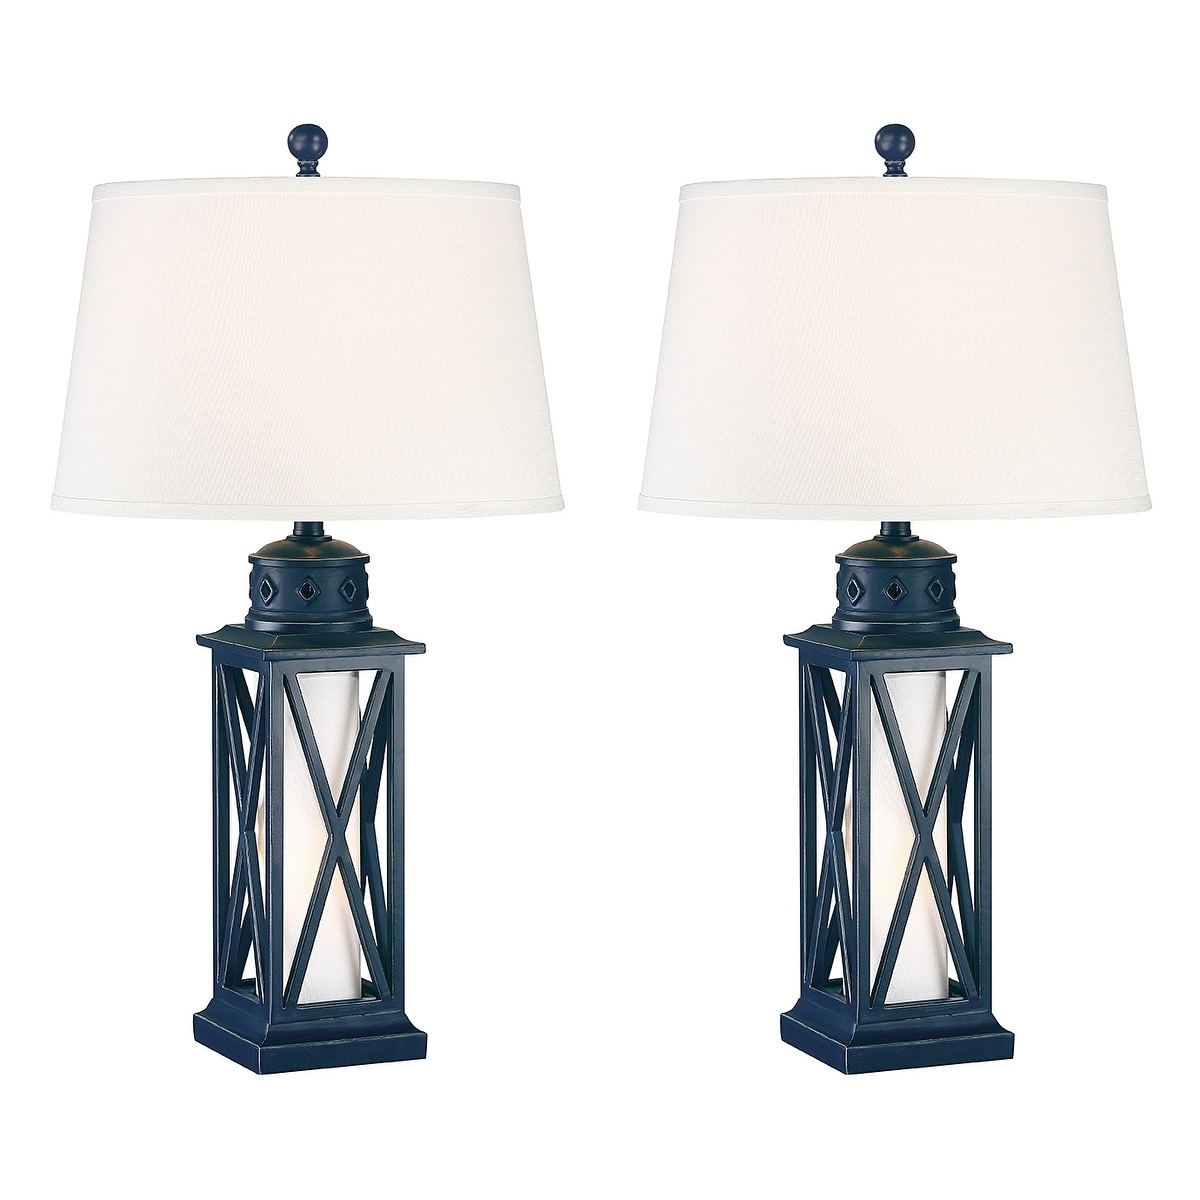 Shop Seahaven Lantern Coastal Table Lamp Navy Blue On Sale